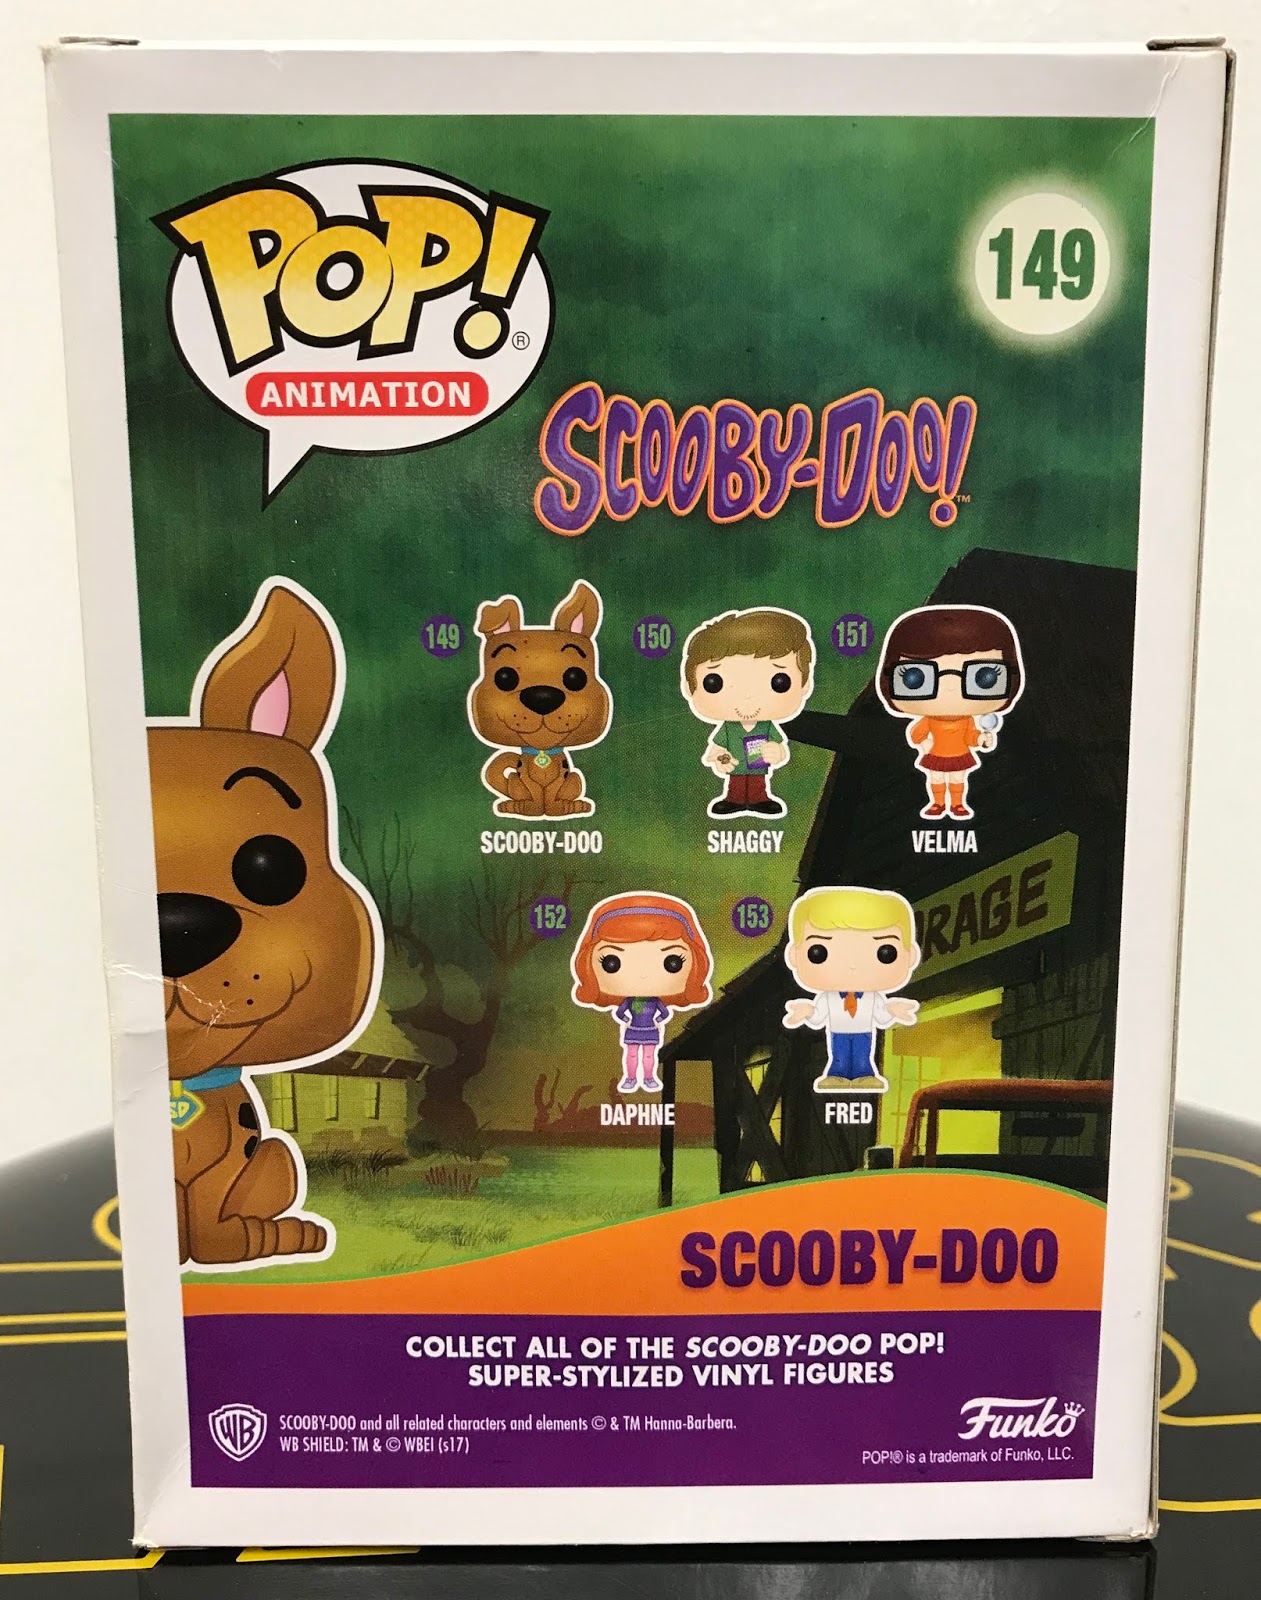 ScoobyAddict's Blog: My Scooby Stuff - Item 404 - Green Scooby Funko ...